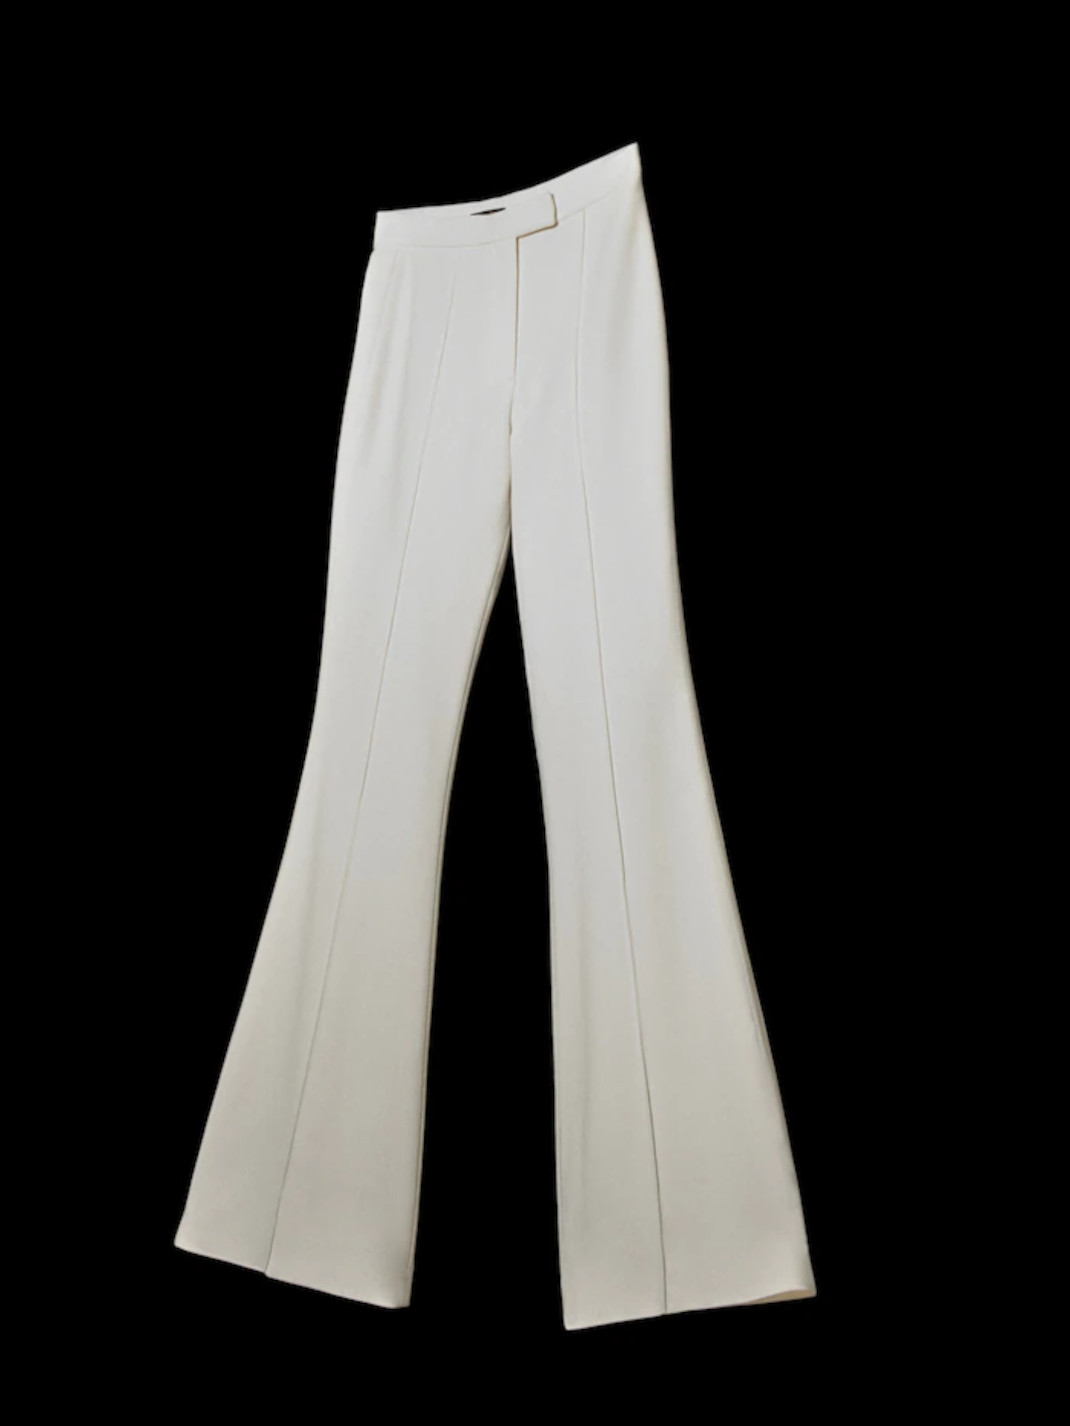 H Ελένη Μενεγάκη με λευκό παντελόνι από τα Massimo Dutti -Σε bootcut γραμμή, κολακεύει τη σιλουέτα